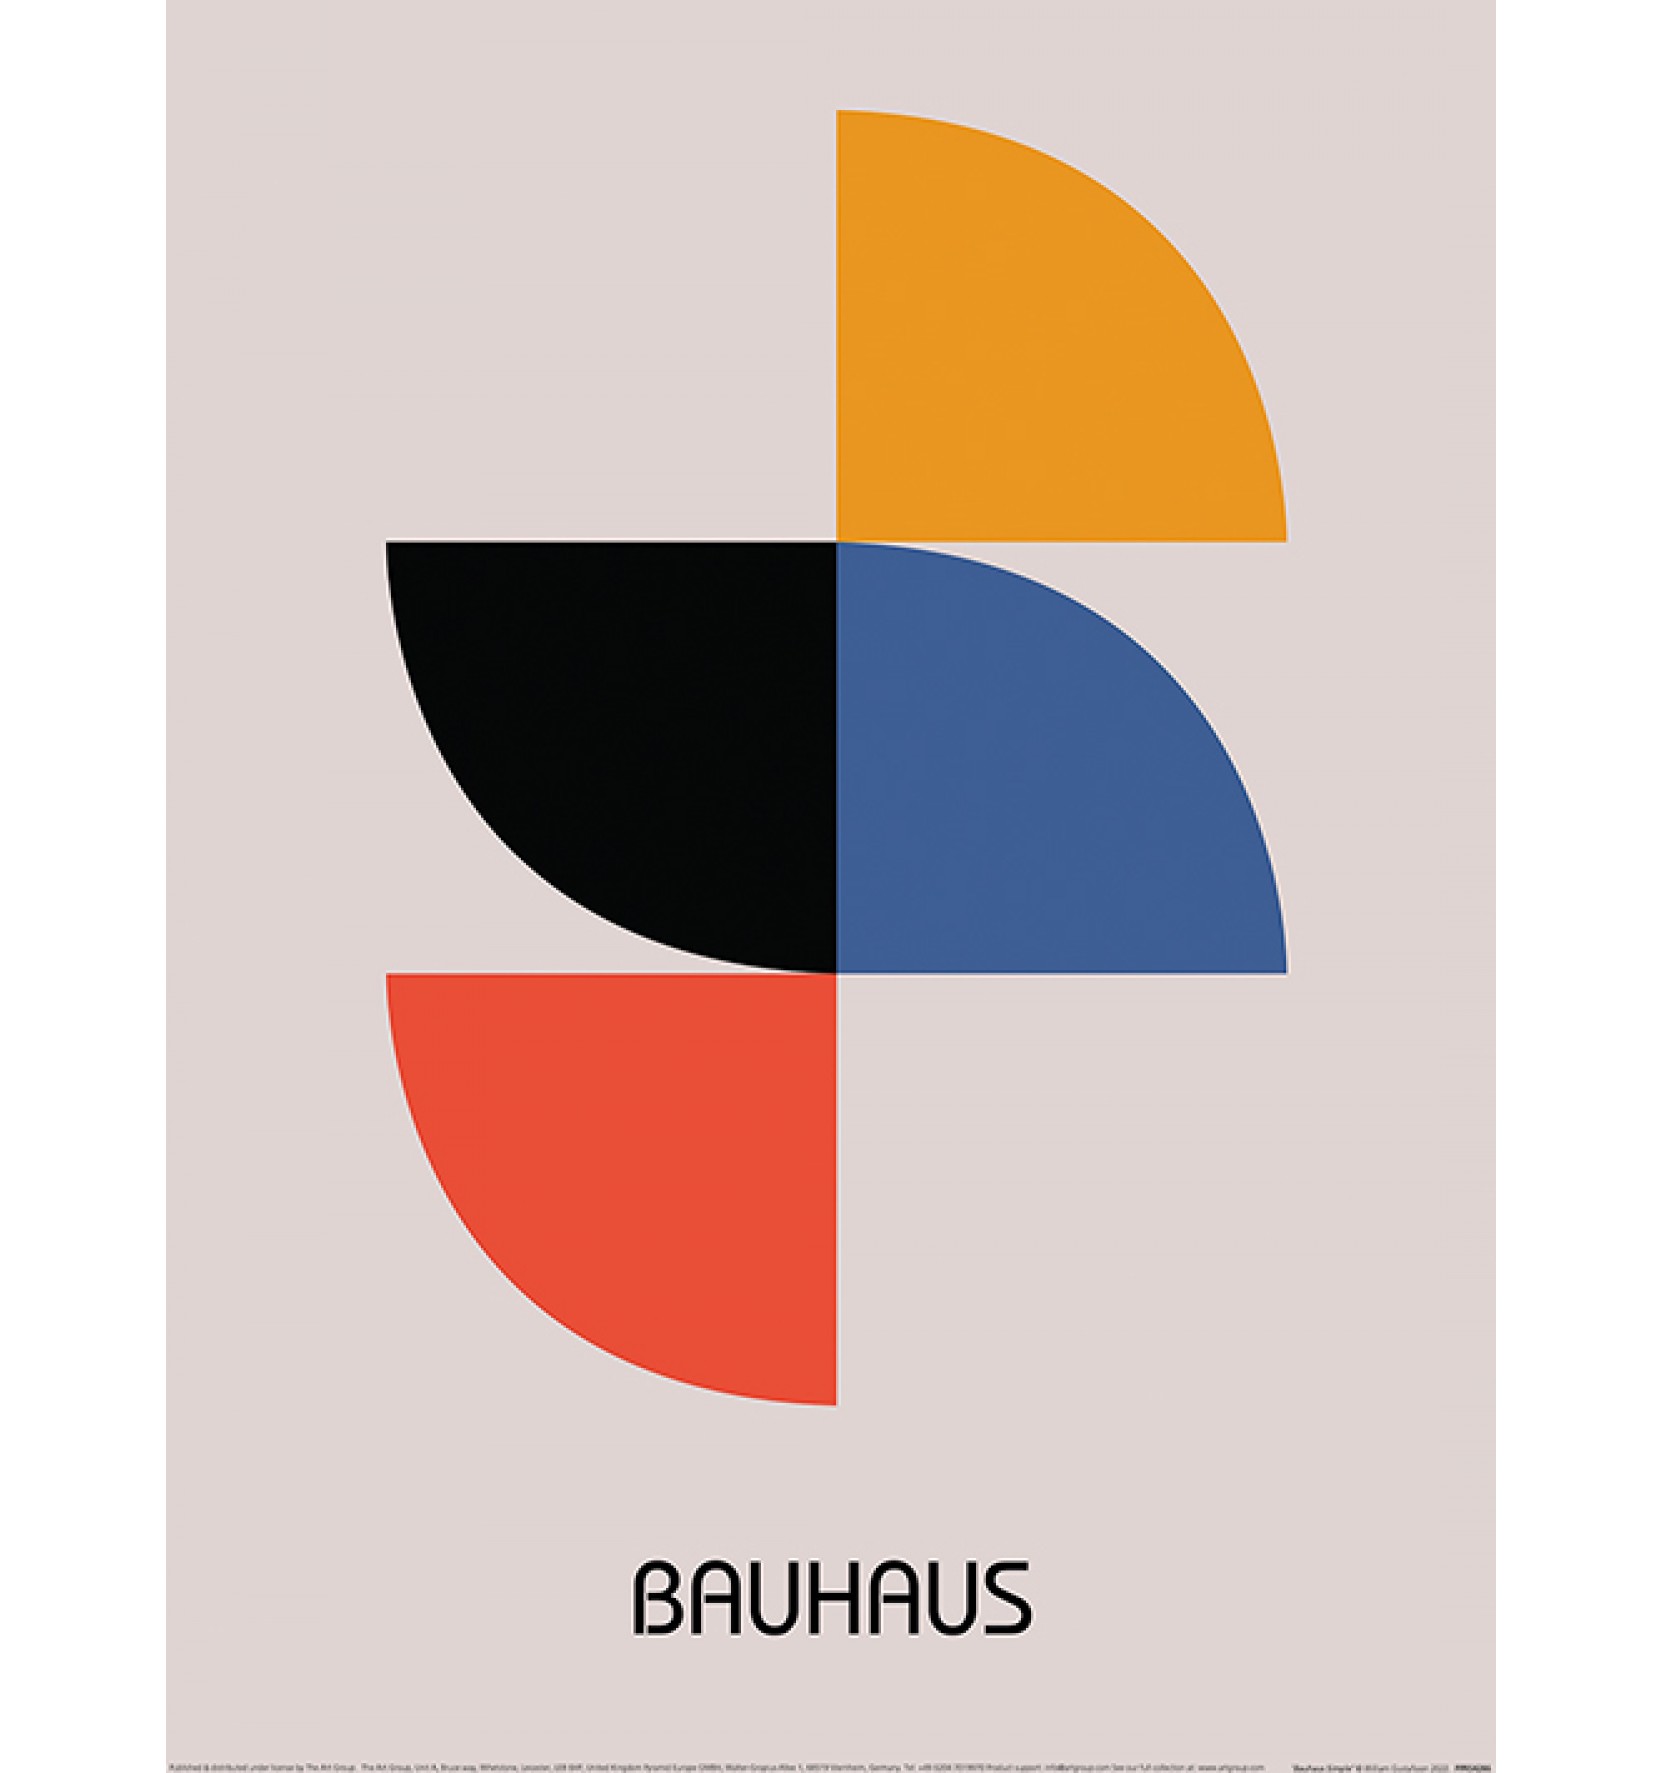 Bauhaus Simple by William Gustafsson